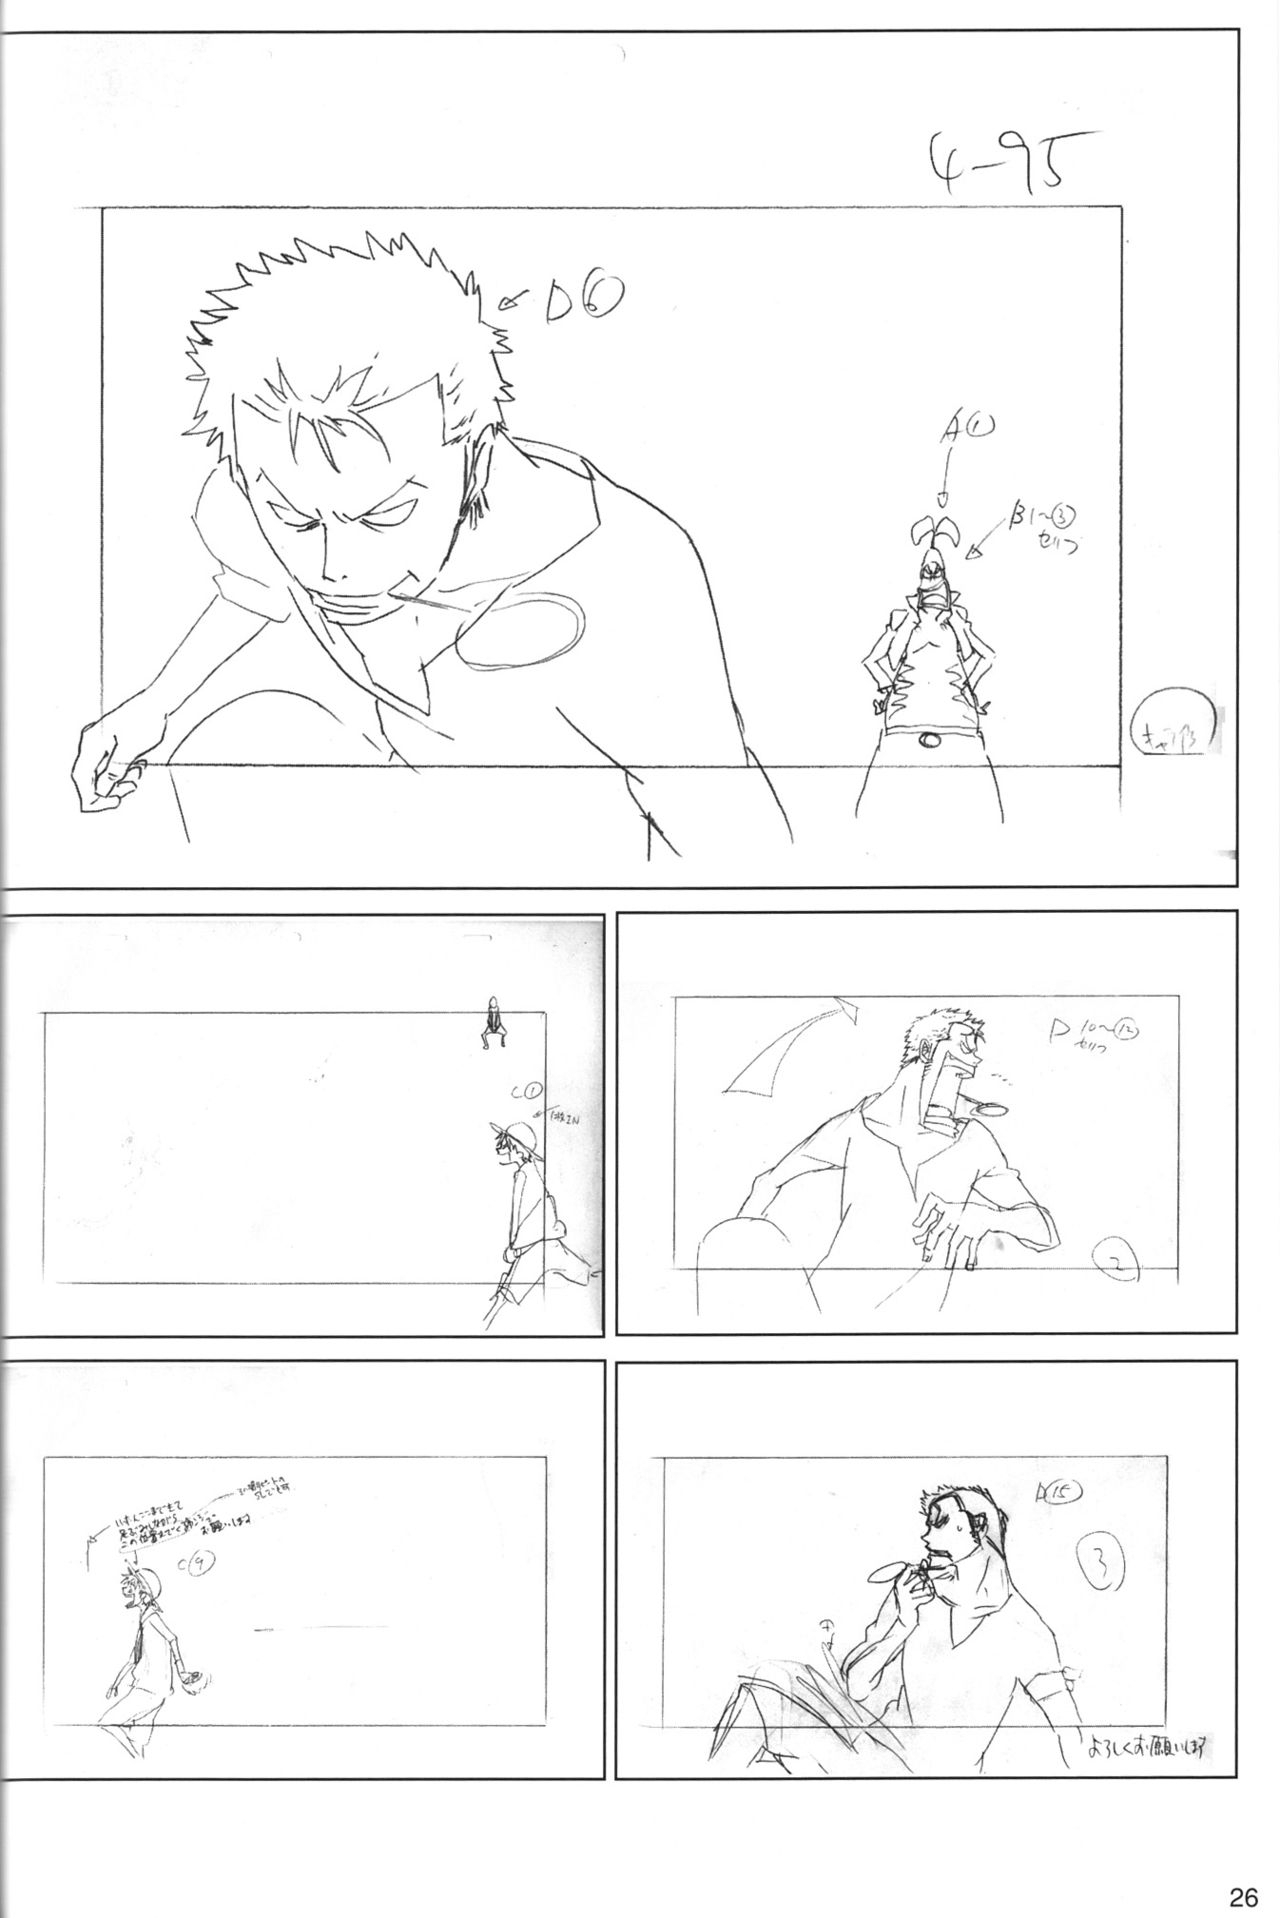 [Artbook] Sushio One Piece Movie 06 - Pencil Test and Design Book 24